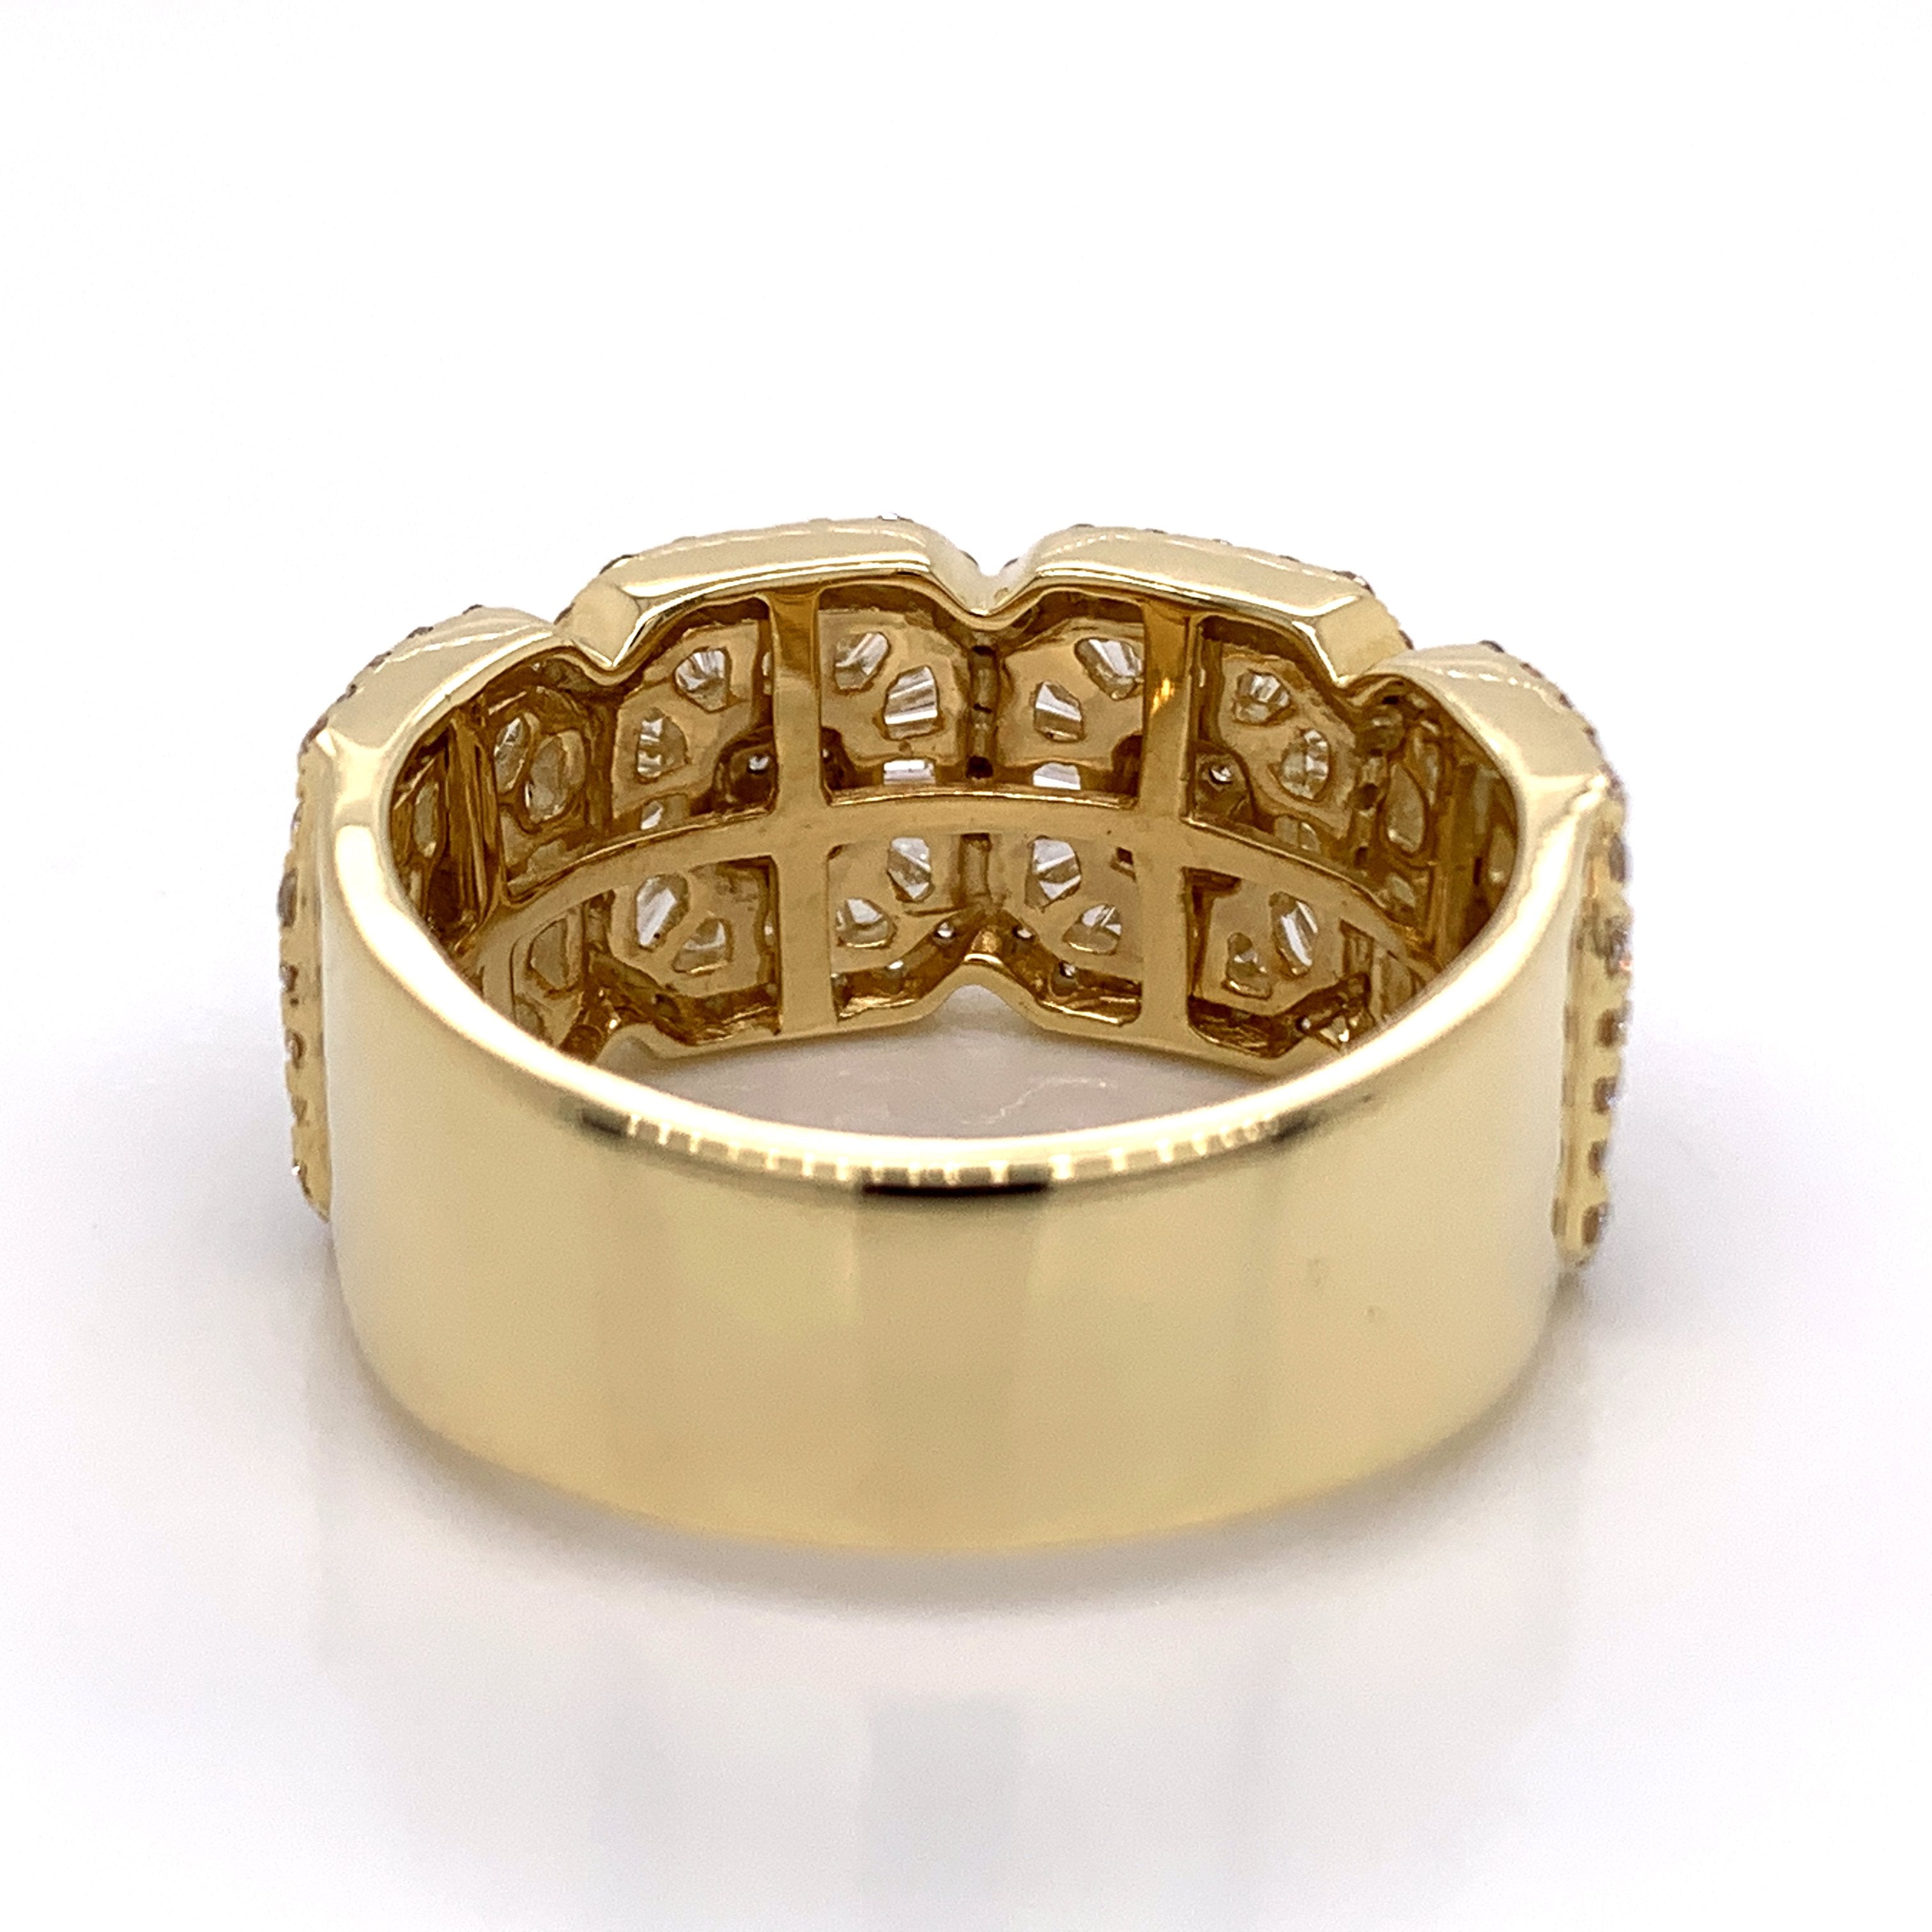 1.96 CT. Diamond Ring in 10K Gold - White Carat Diamonds 